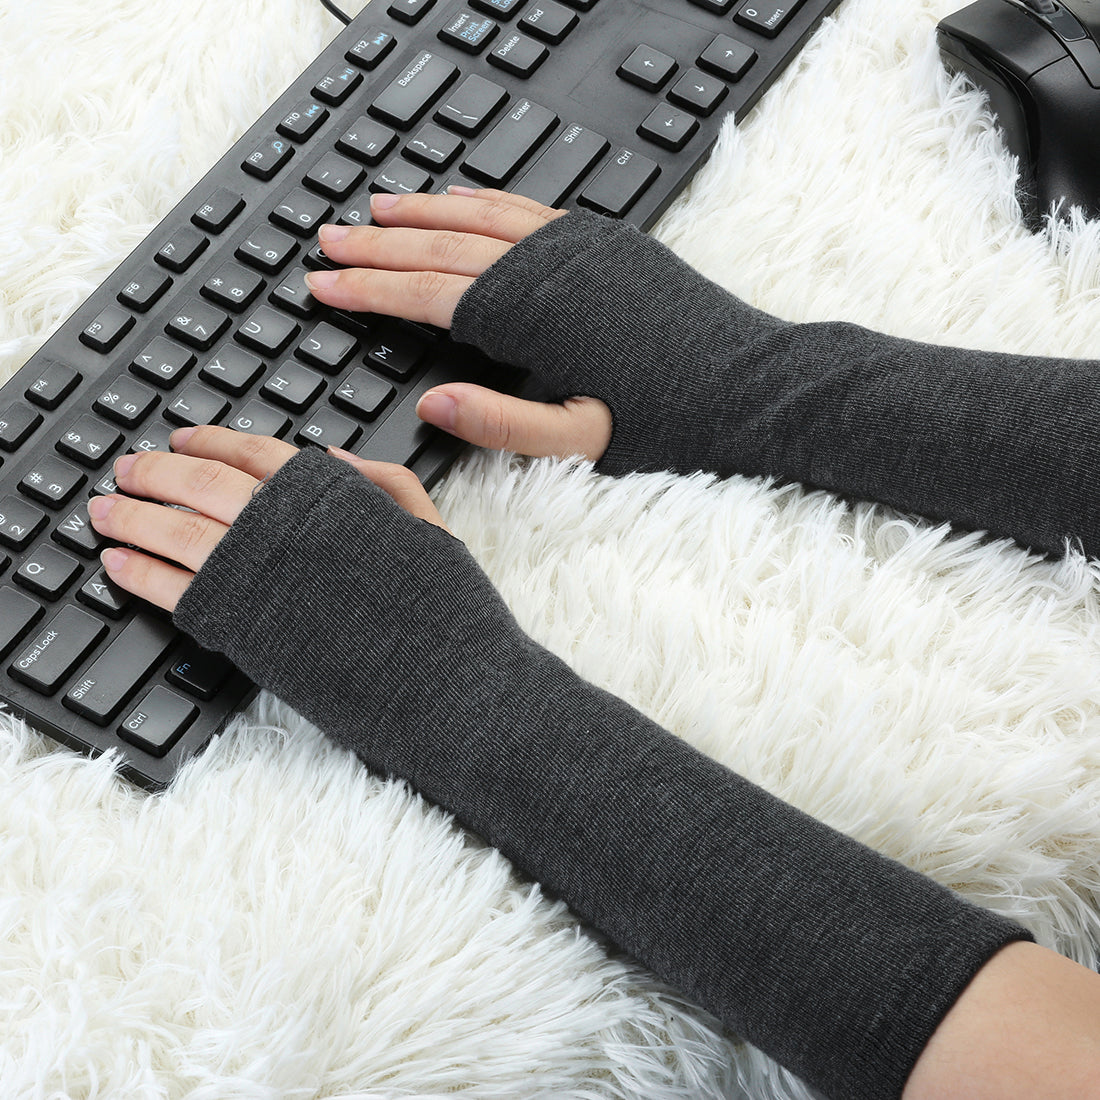 Allegra K Arm Warmers Winter Knitted Elbow Long Fingerless Gloves